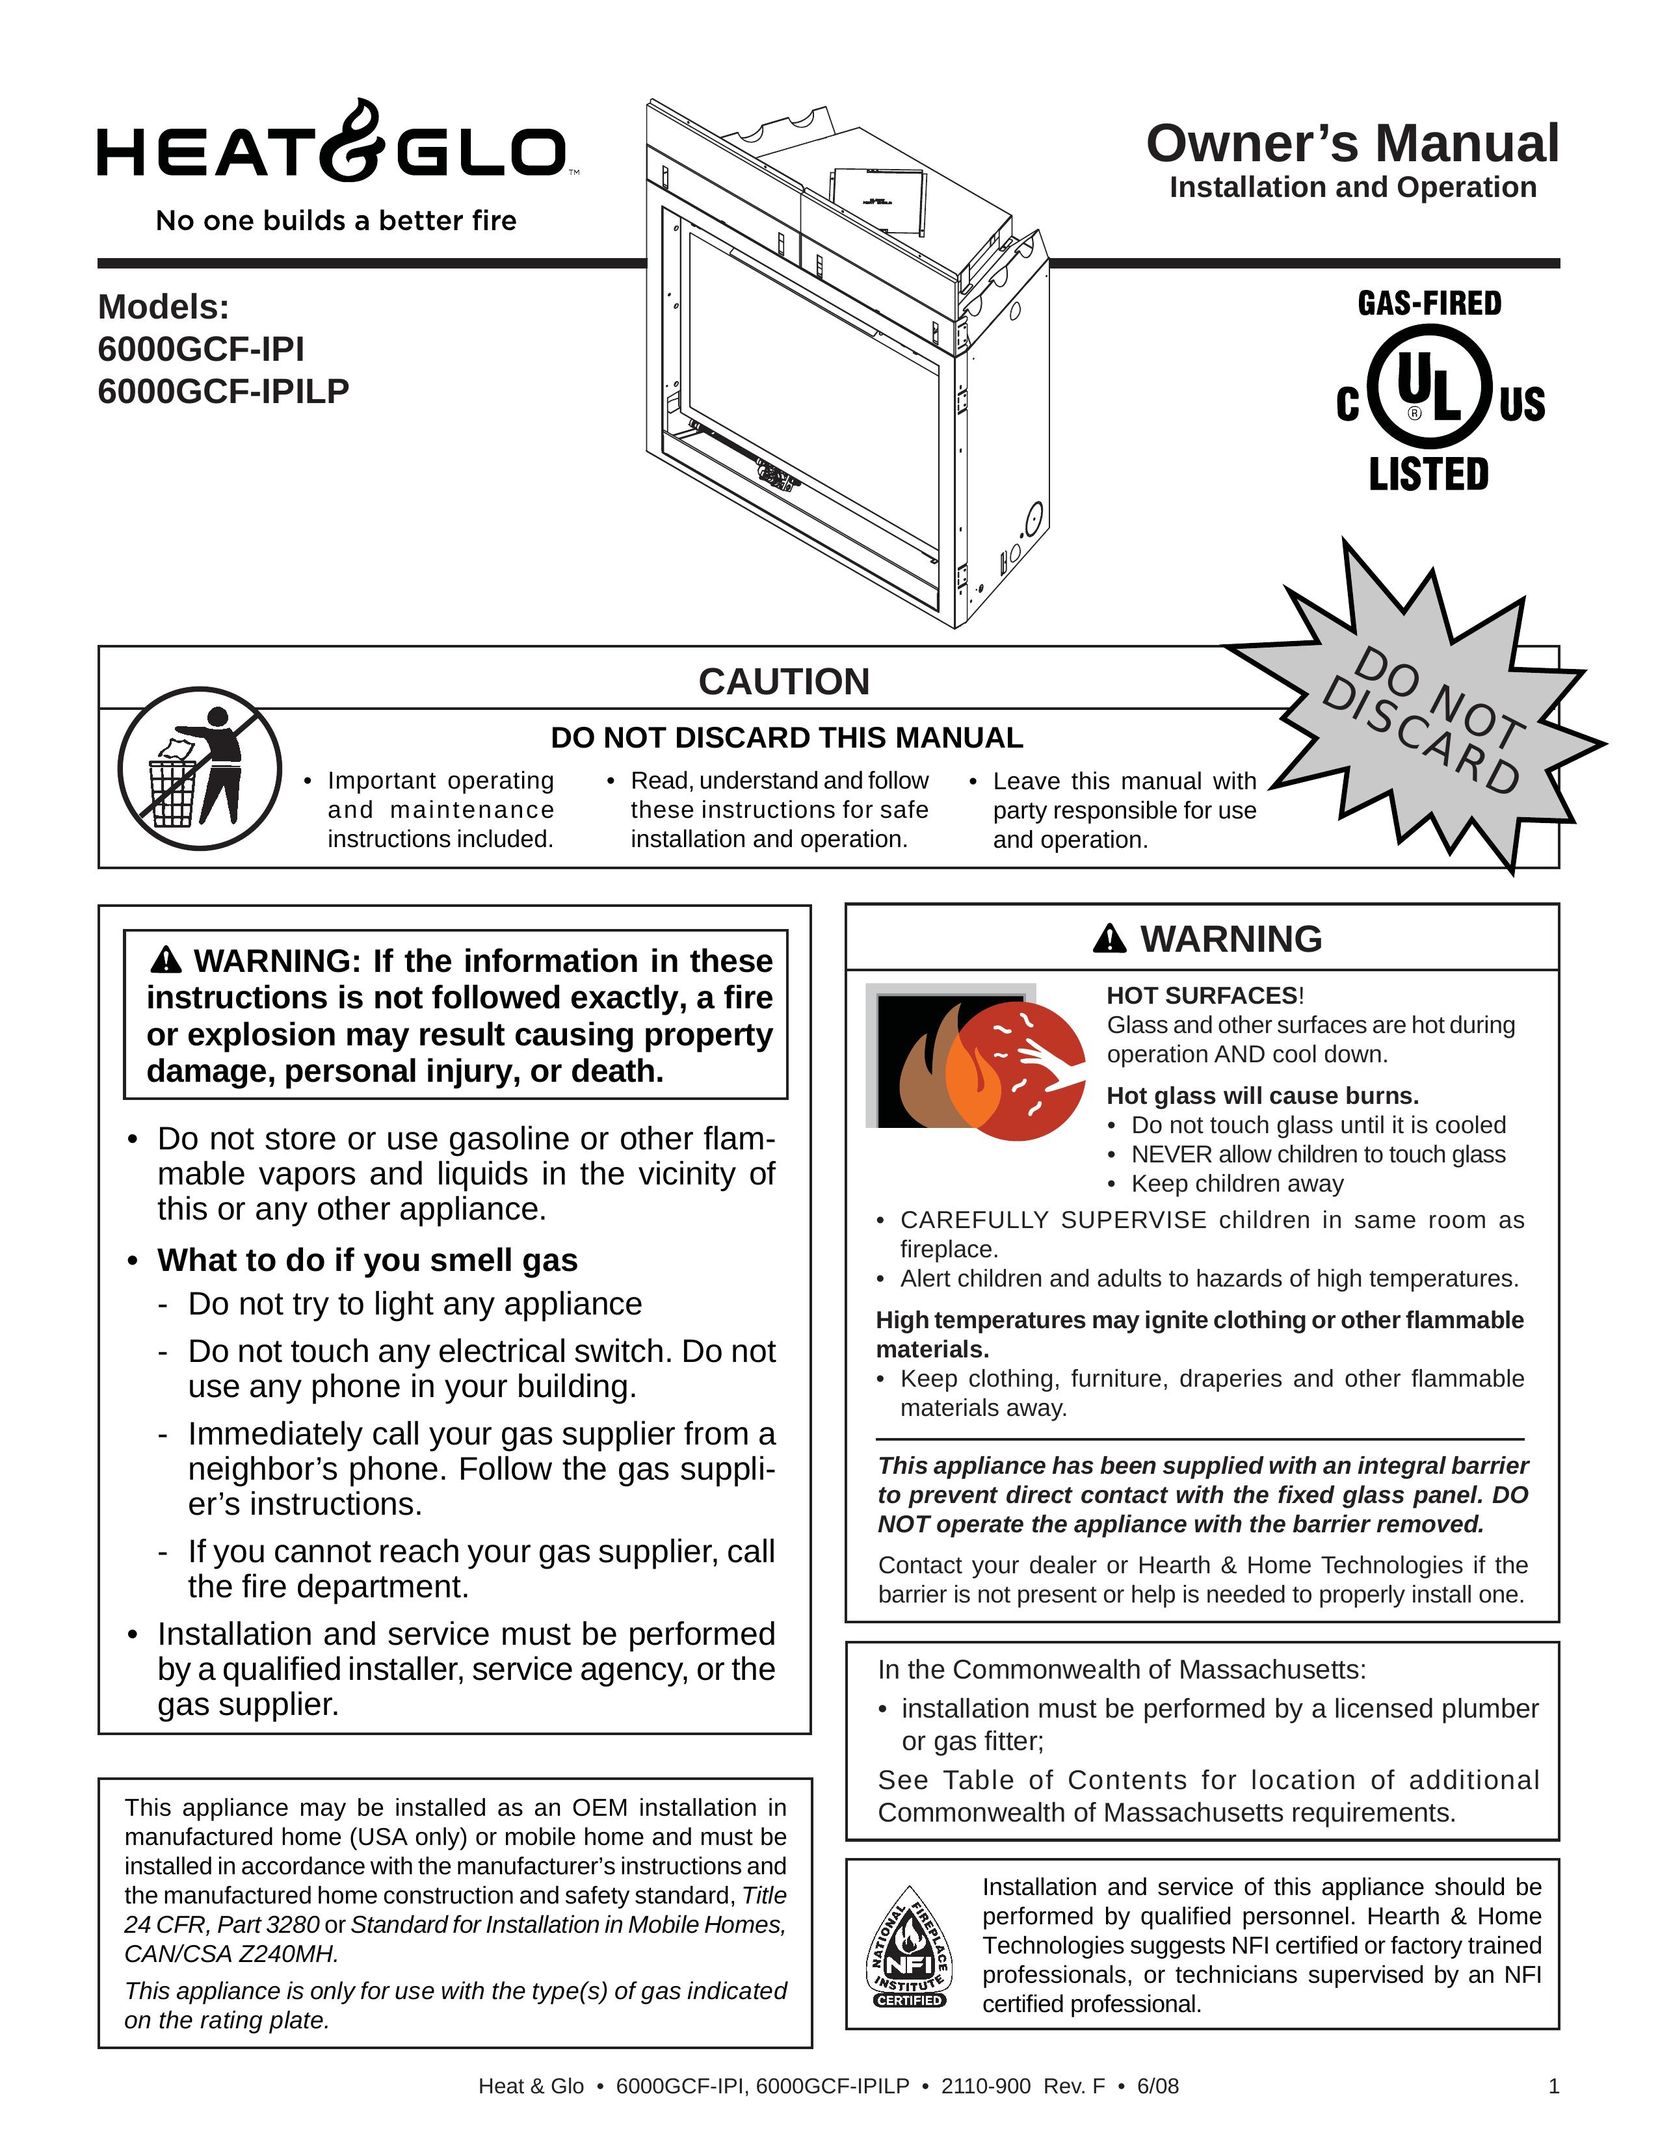 Heat & Glo LifeStyle 6000GCF-IPILP Indoor Fireplace User Manual